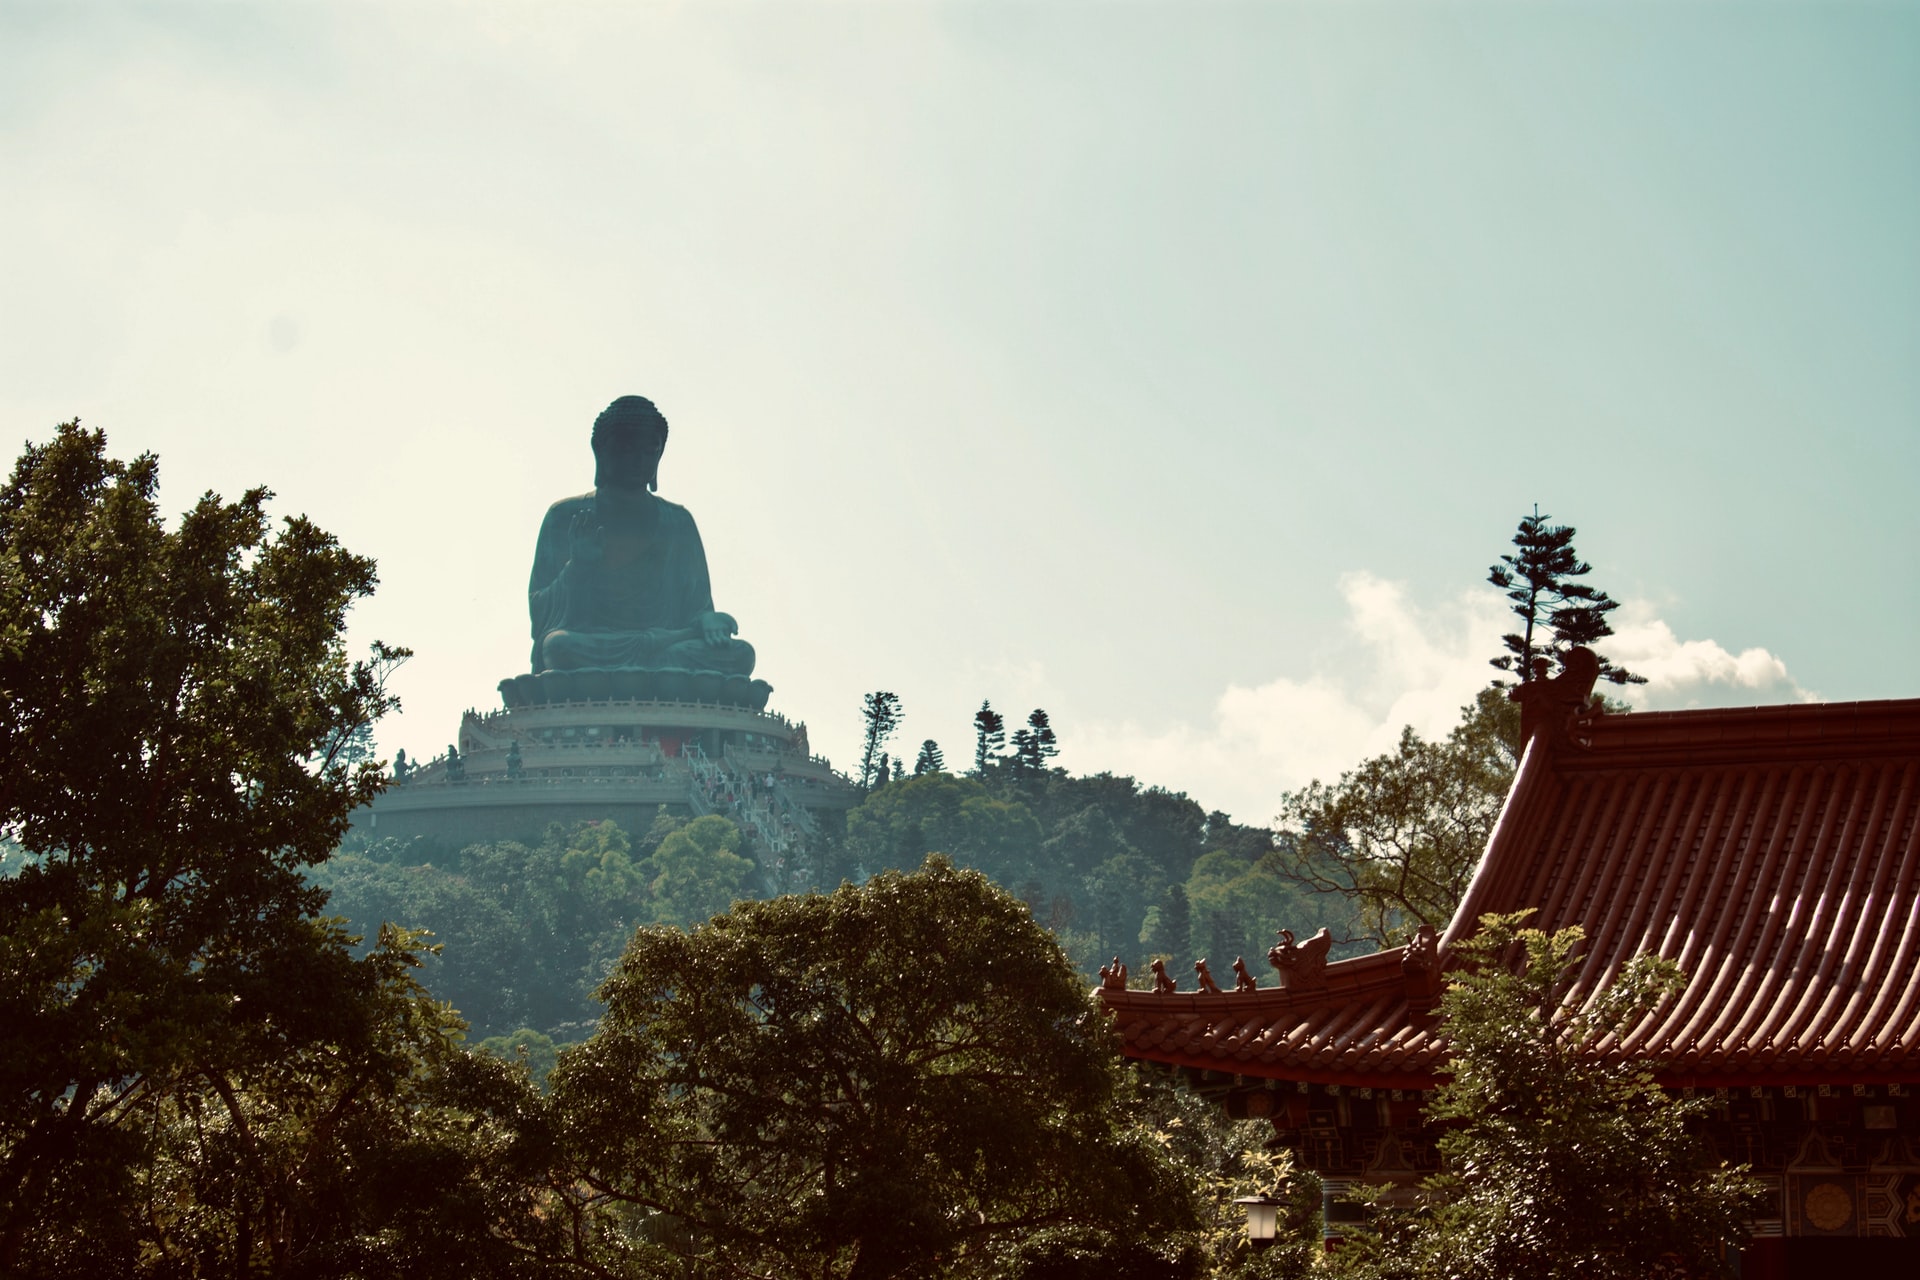 the Big Buddha in Lantau Island Hong Kong